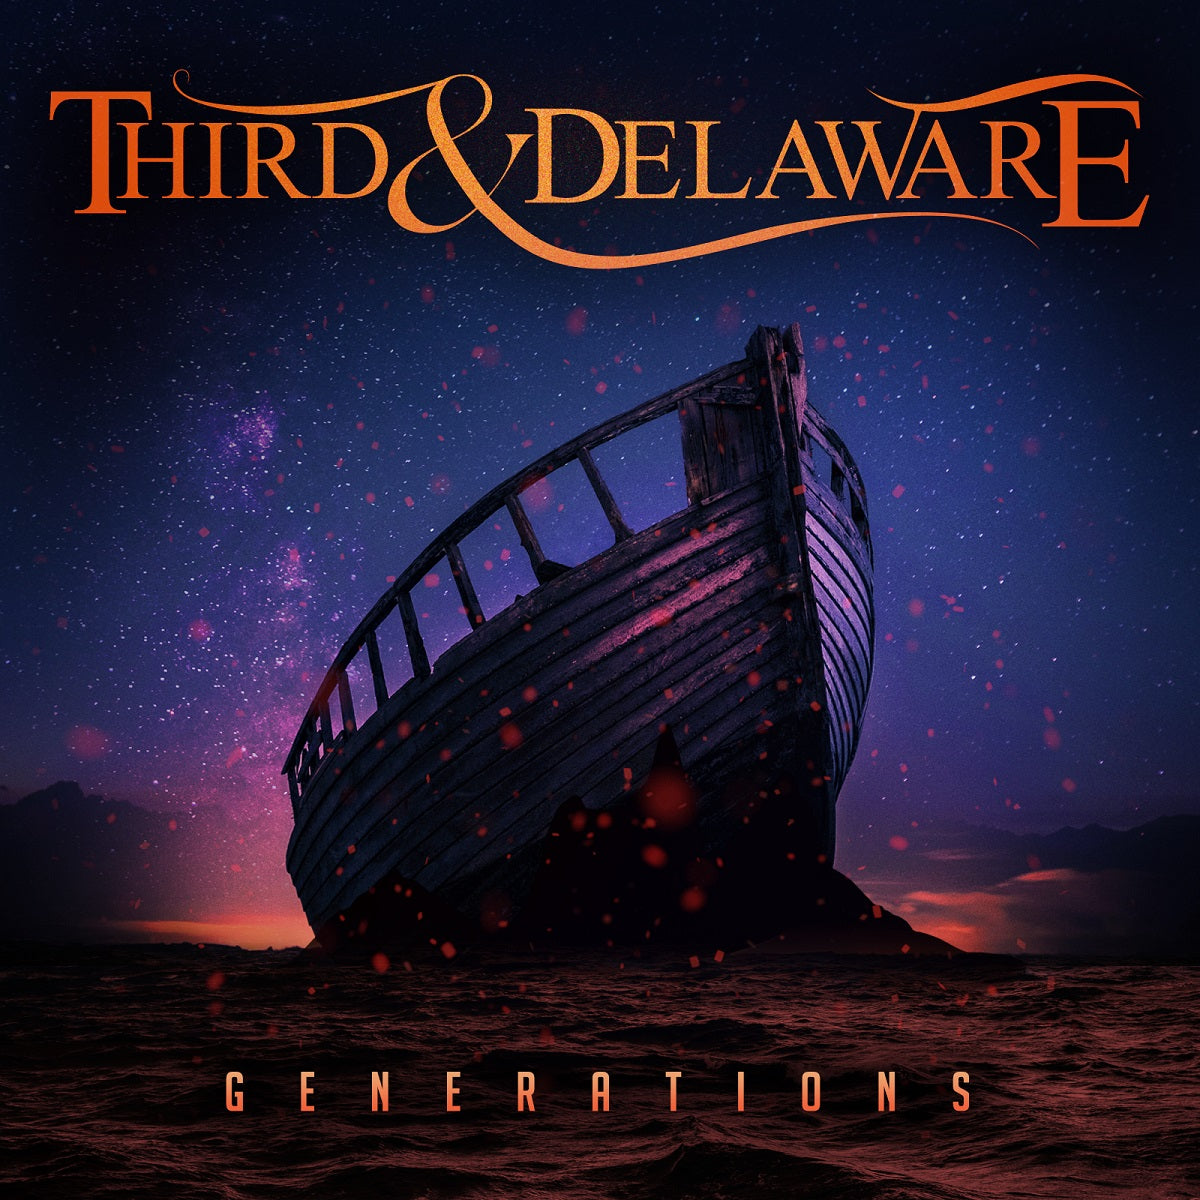 Third & Delaware - 'Generations EP'